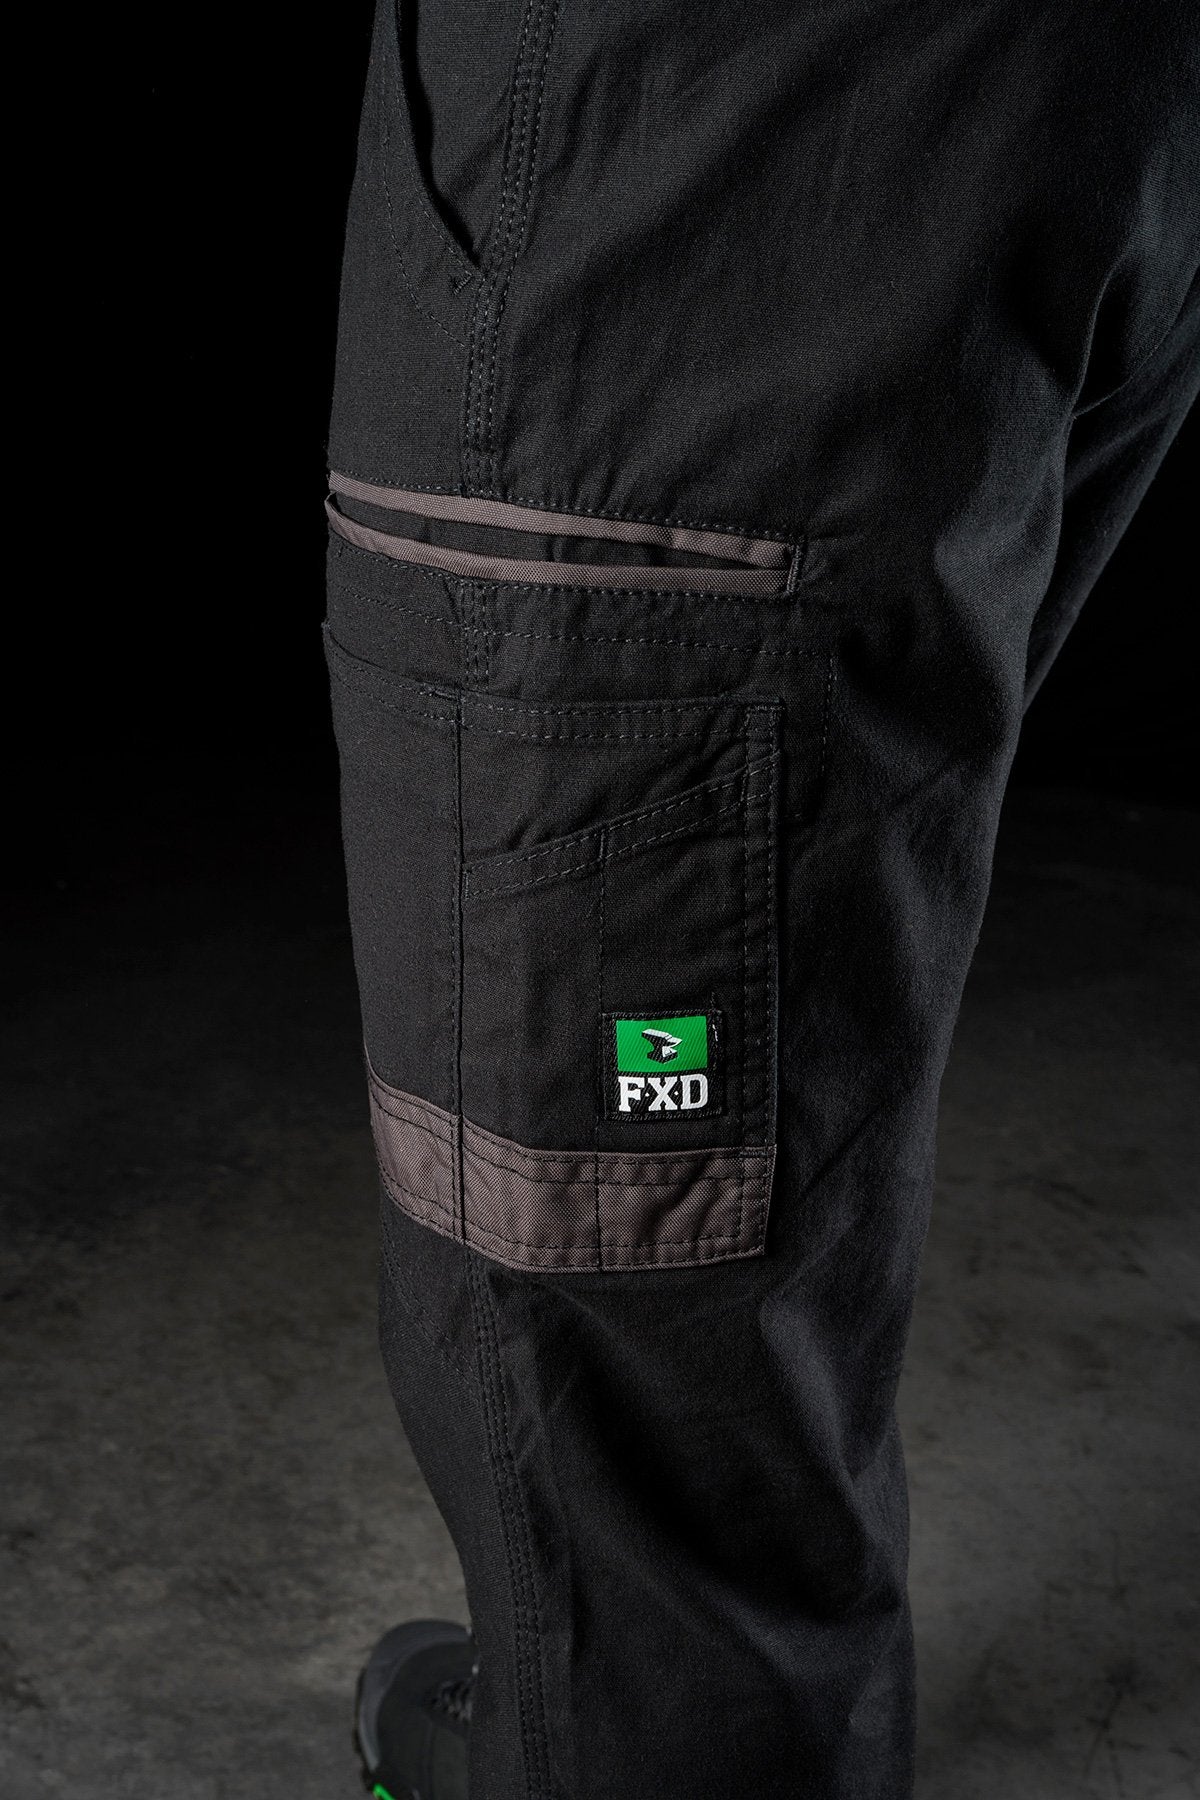 FXD  WP4 Cuffed Work Pants  Khaki  Hip Pocket Workwear  Safety